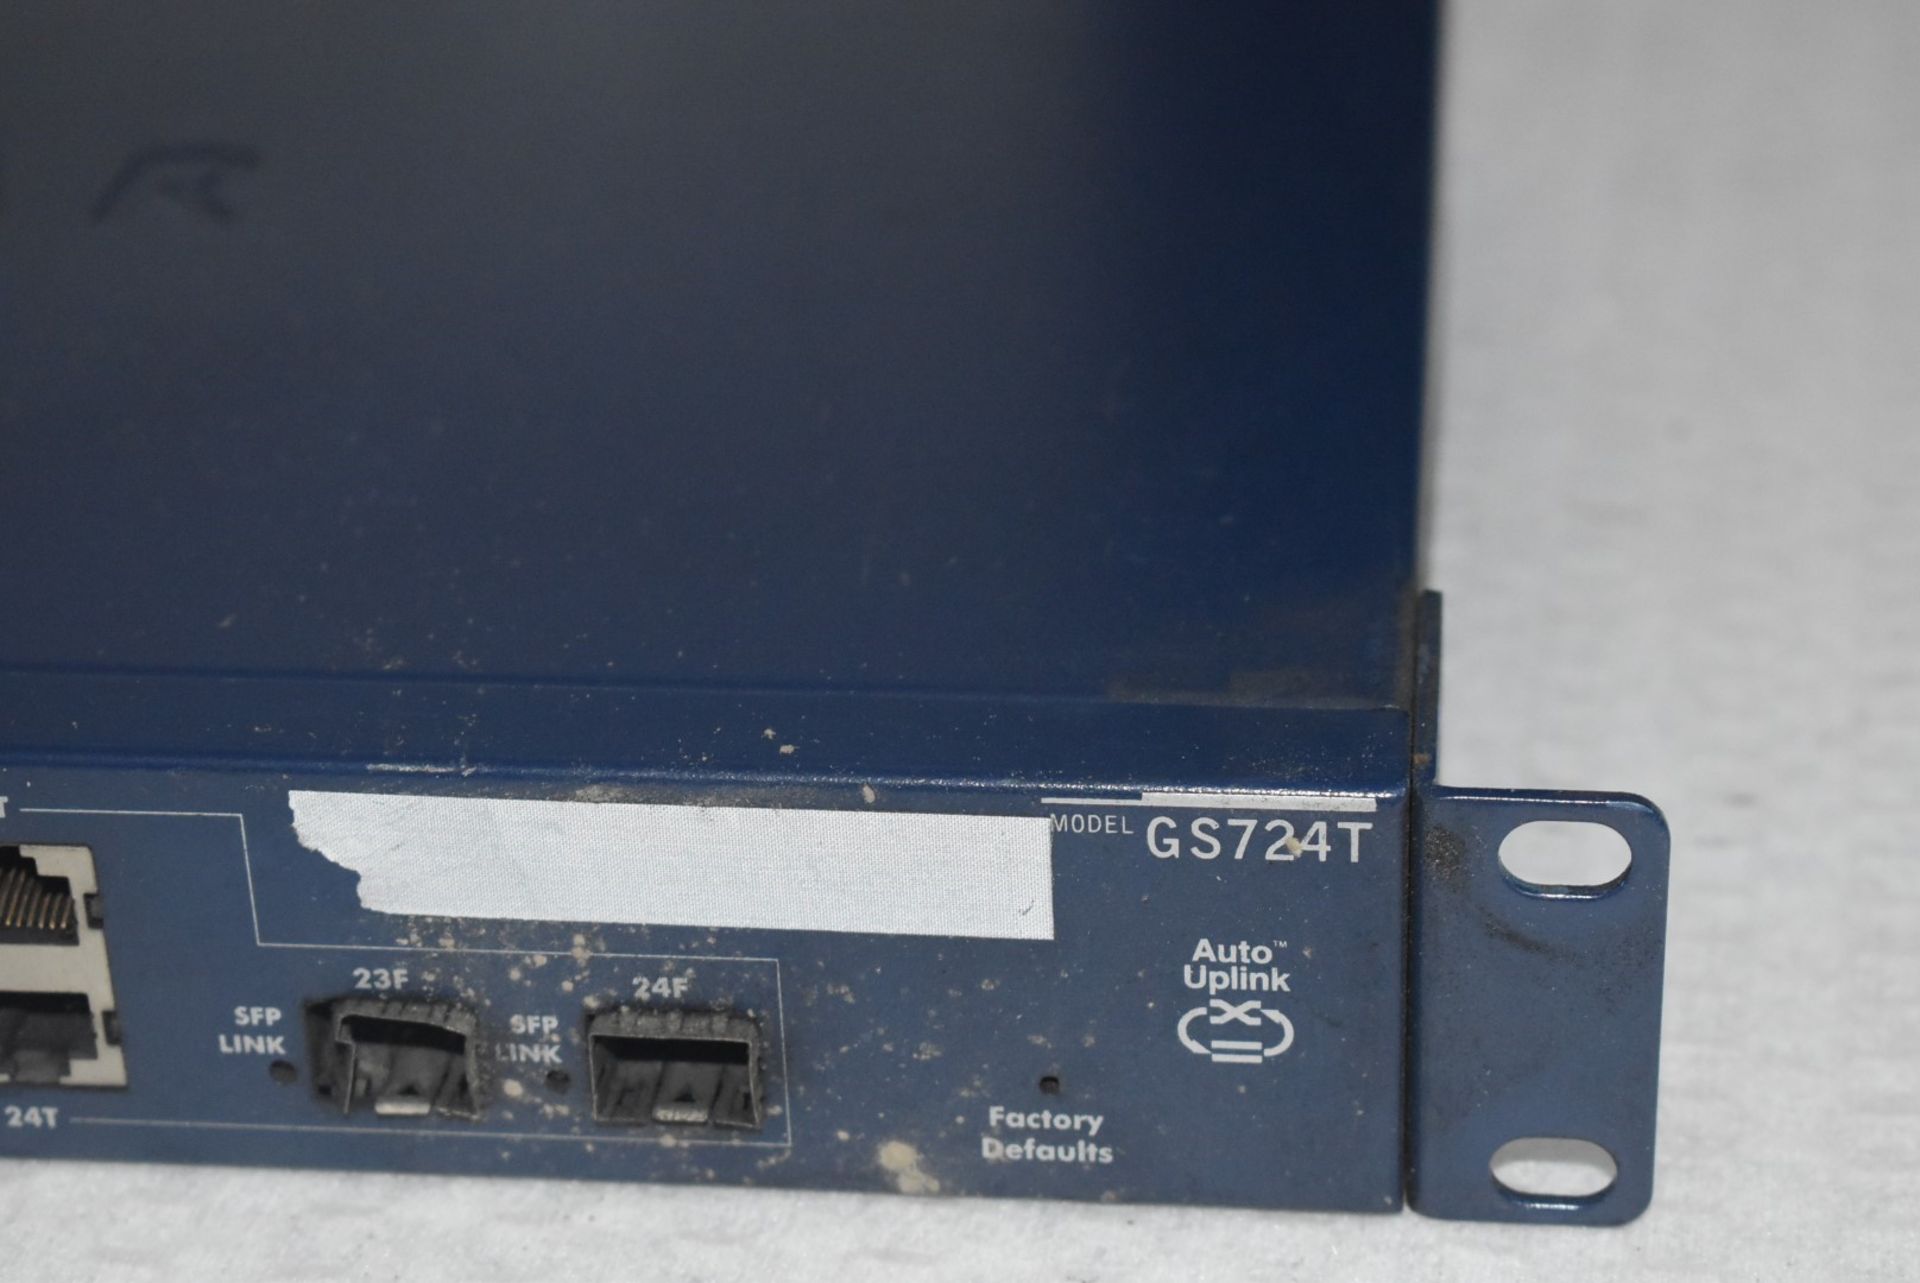 1 x Netgear GS724T 24 Port Smart Switch - Image 2 of 3